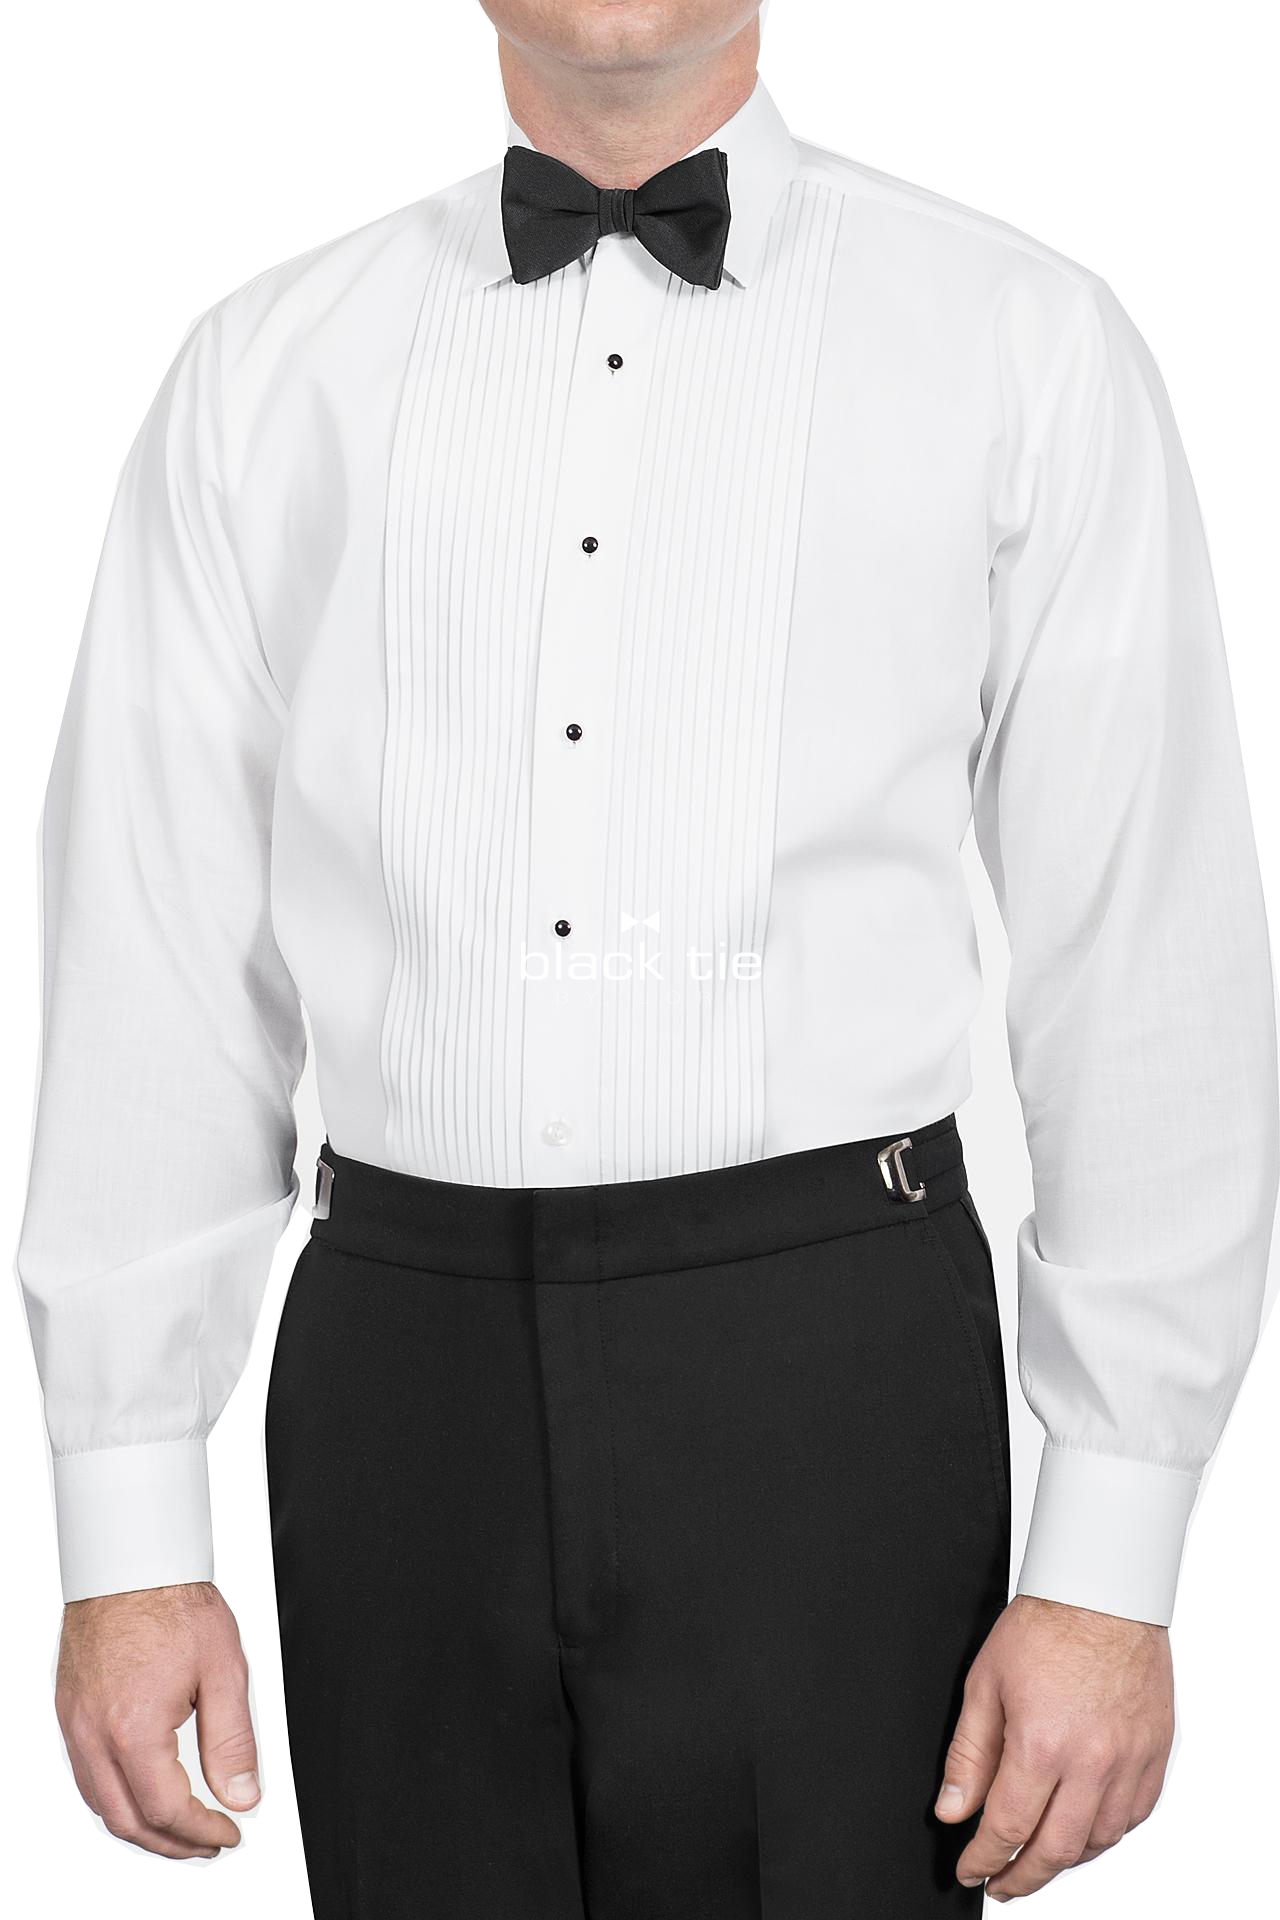 Classic Laydown Collar - Online Tuxedo Rental